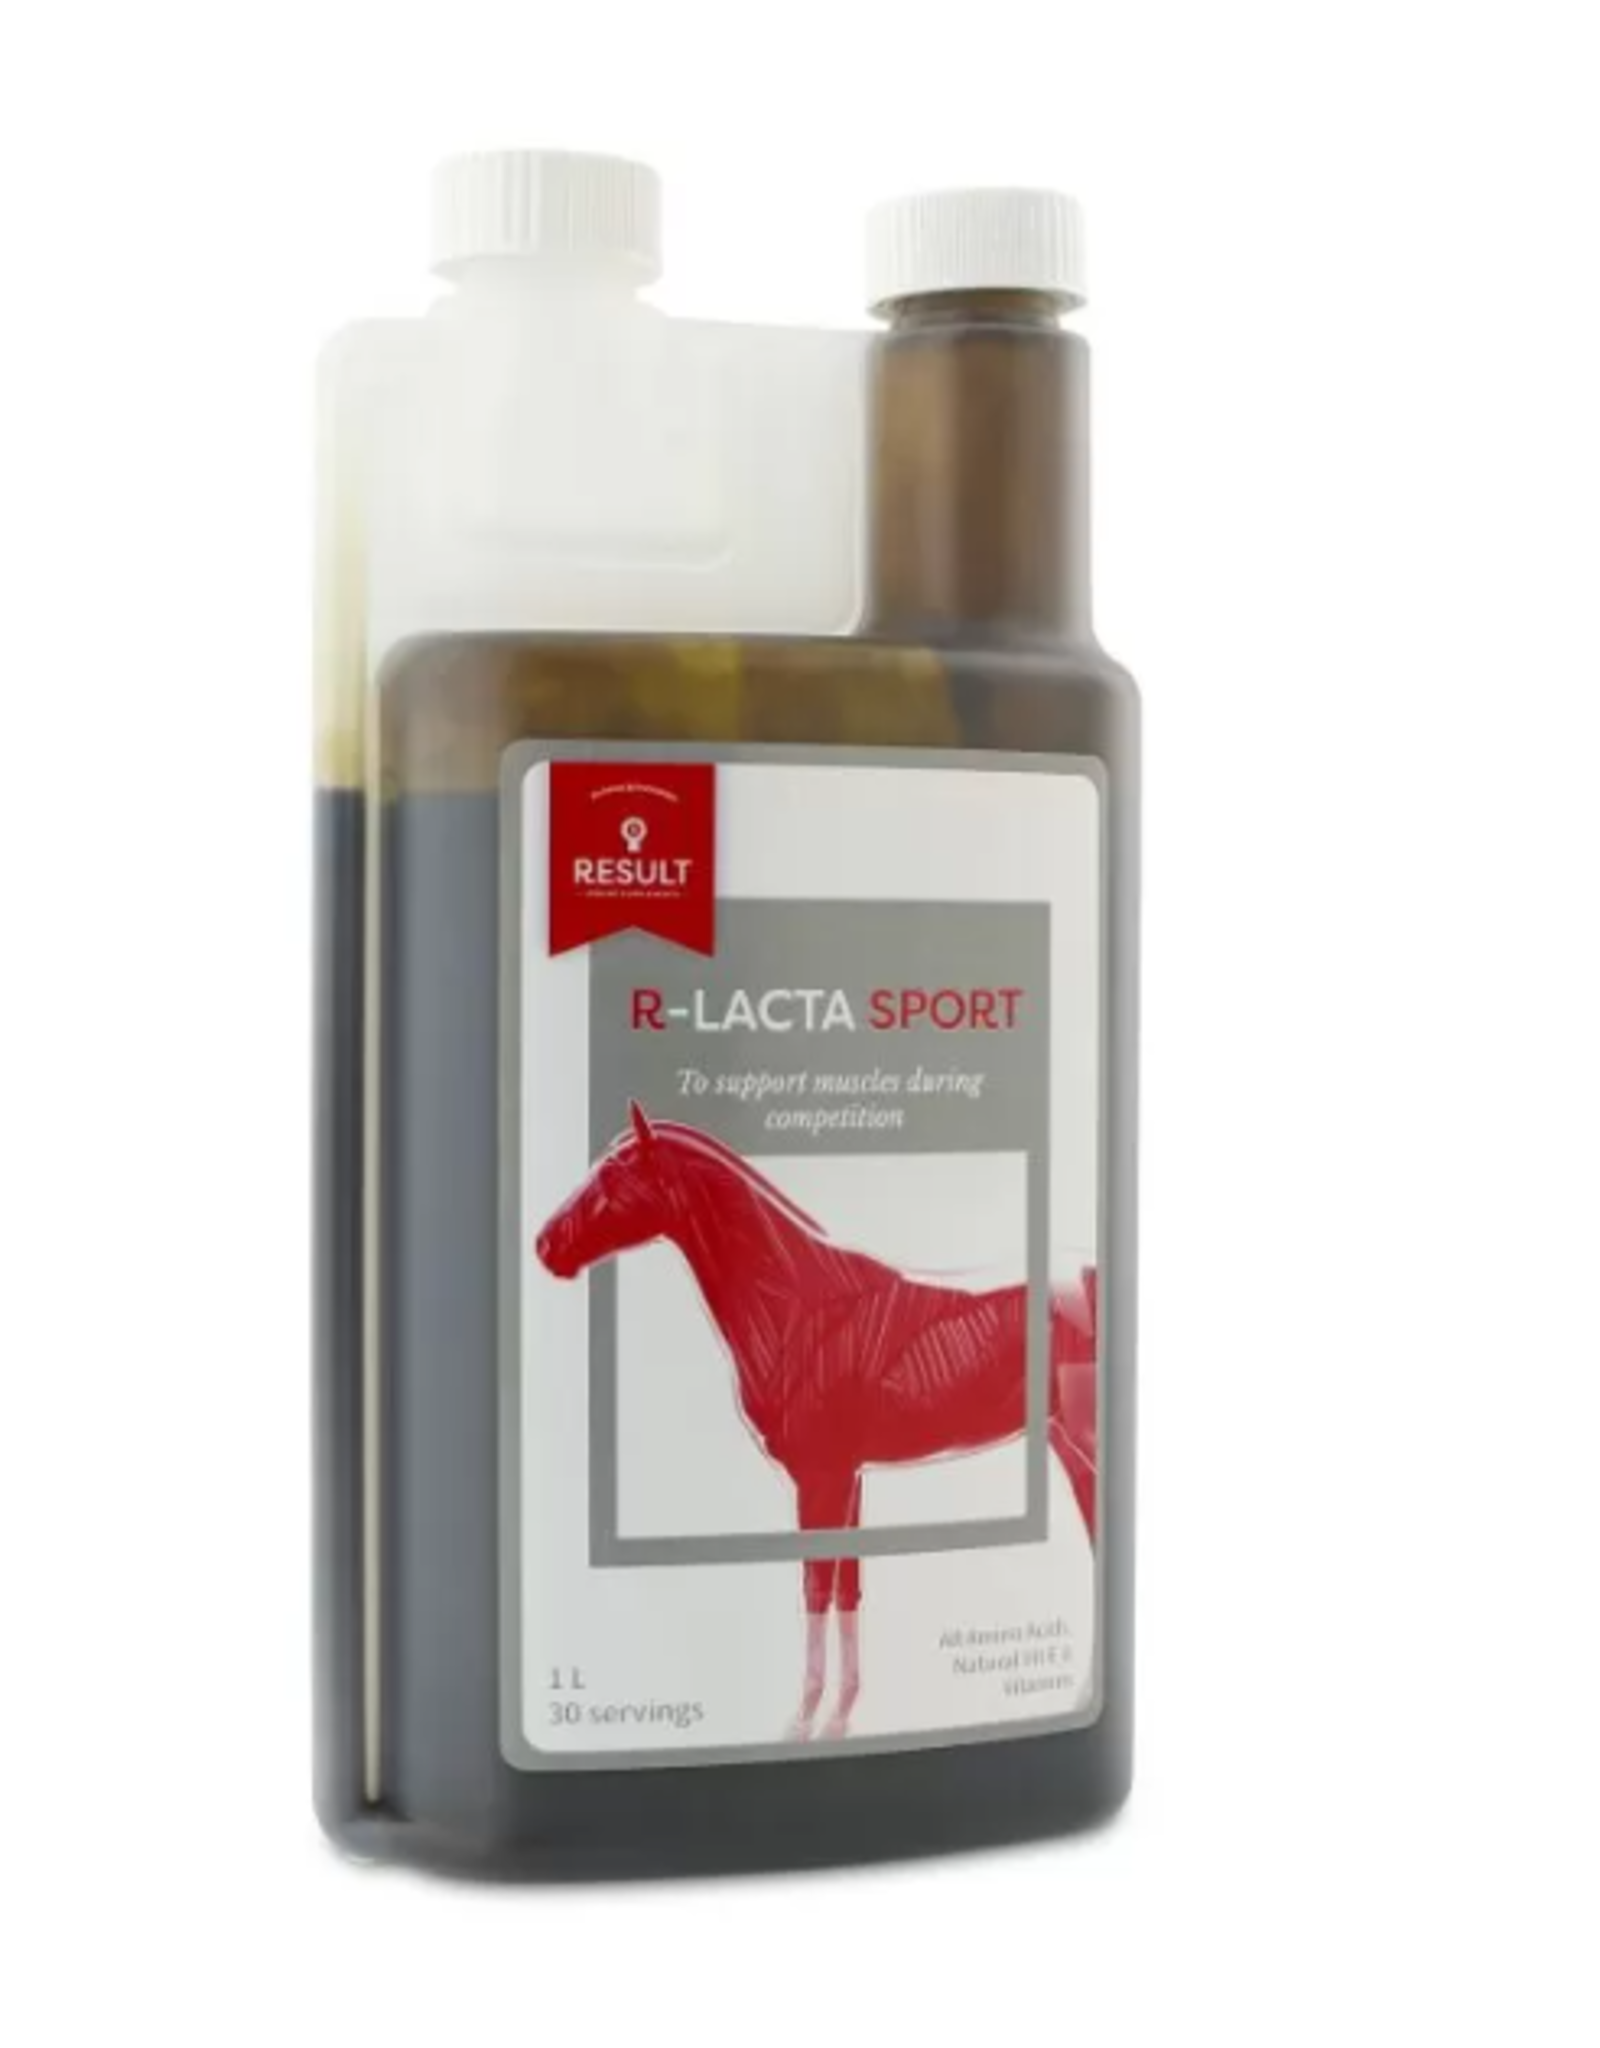 Equine Result R-LACTA SPORT